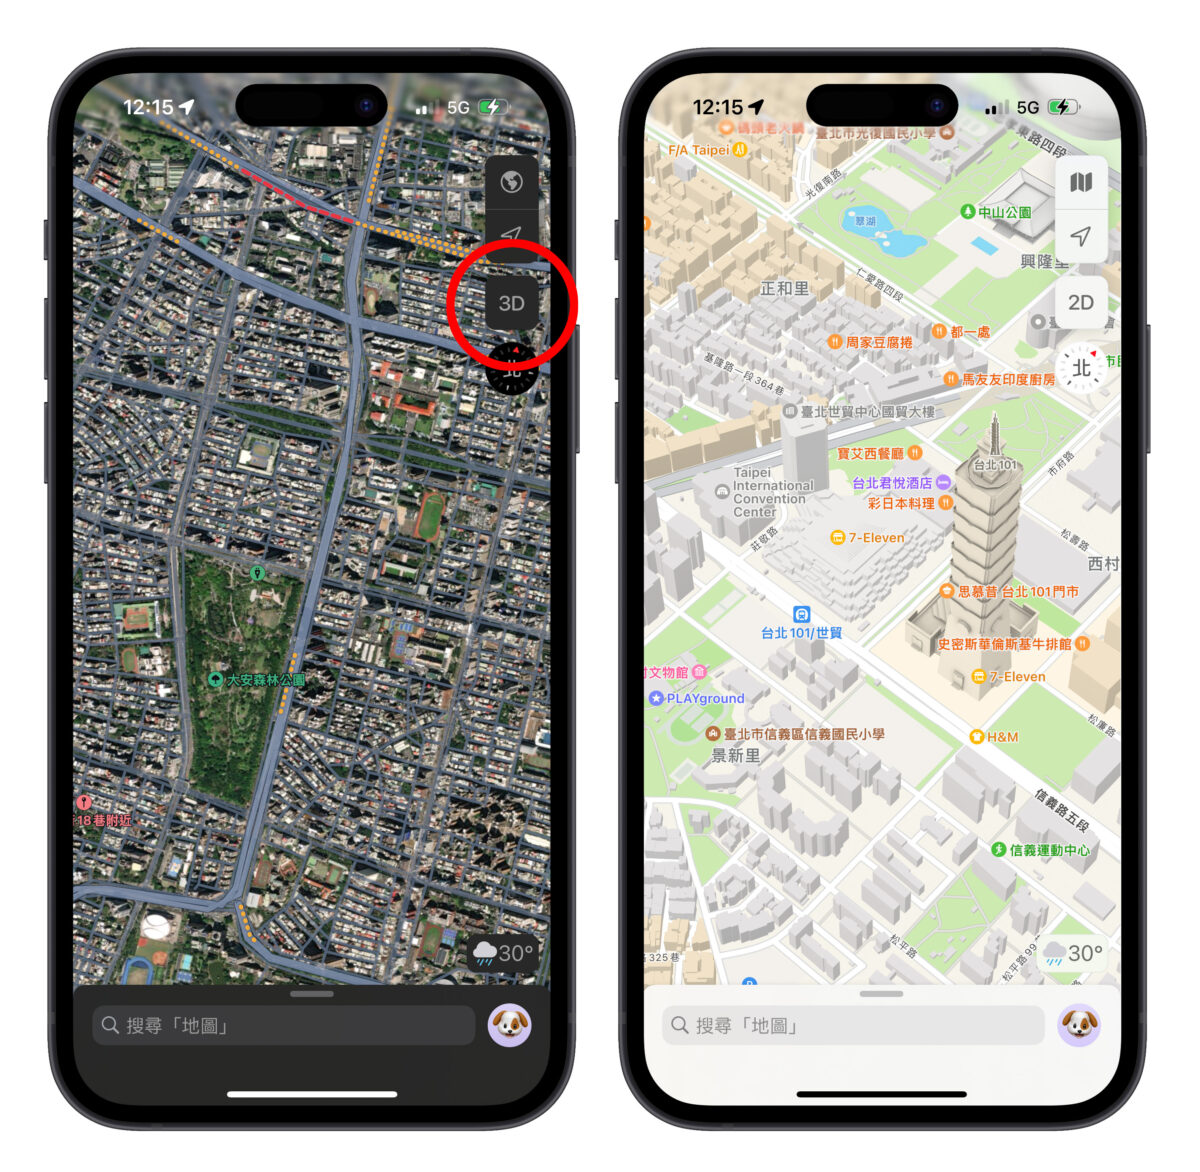 Apple 地圖 3D 地圖 AR 導航 更新